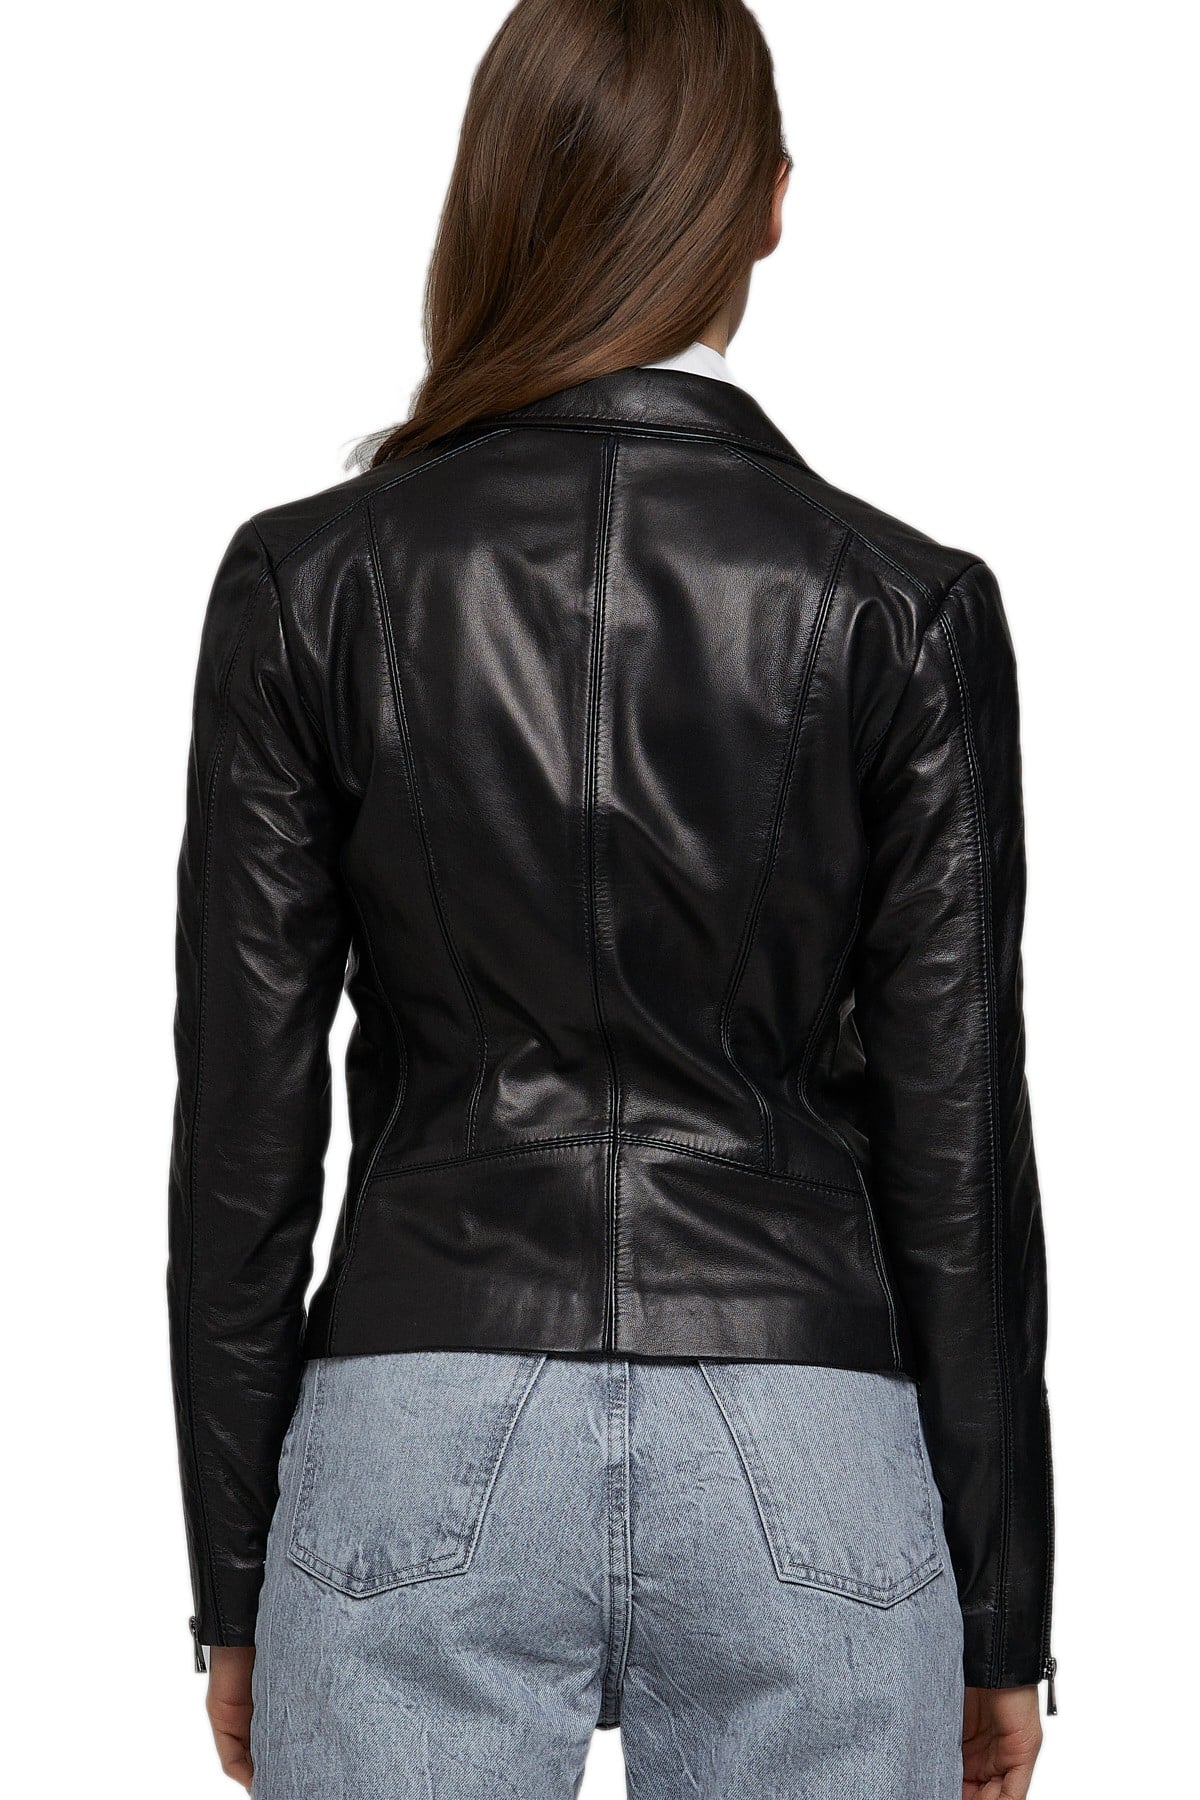 Gisele Bundchen Women's 100 % Real Black Leather Jacket